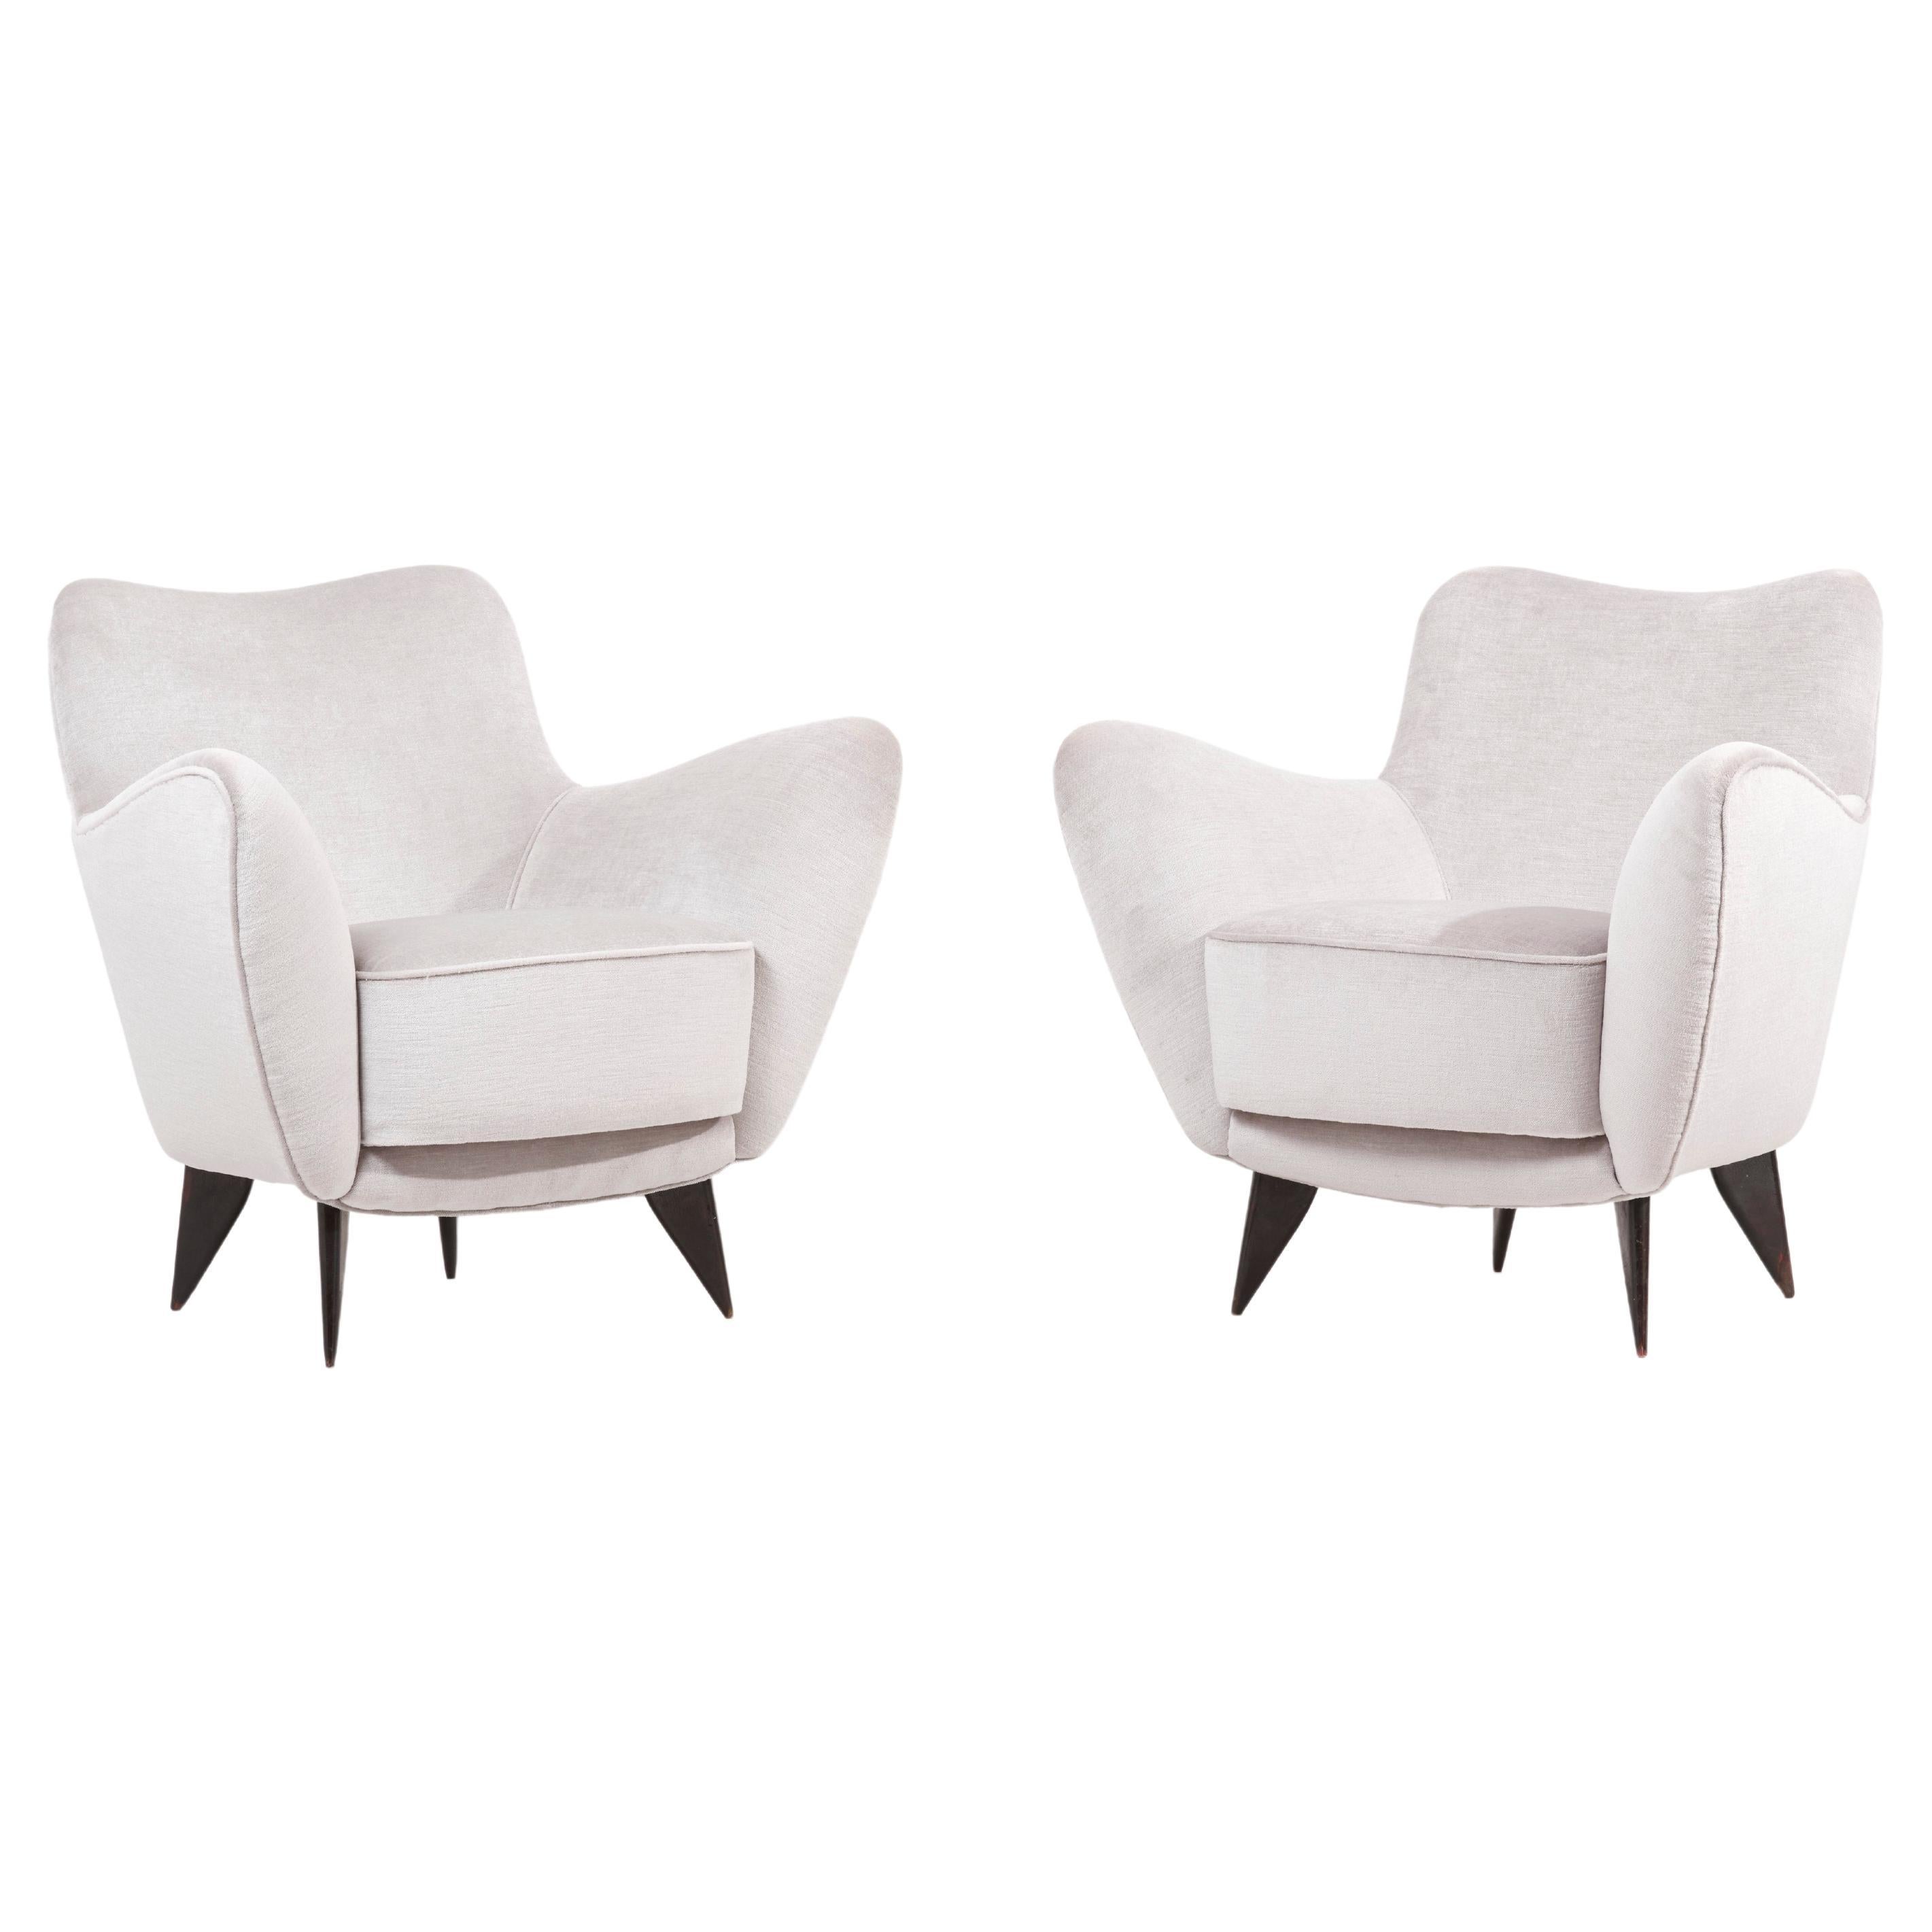 Pair of Gray Guglielmo Veronesi "Perla" Lounge Chairs, by I.S.A. Bergamo, 1952